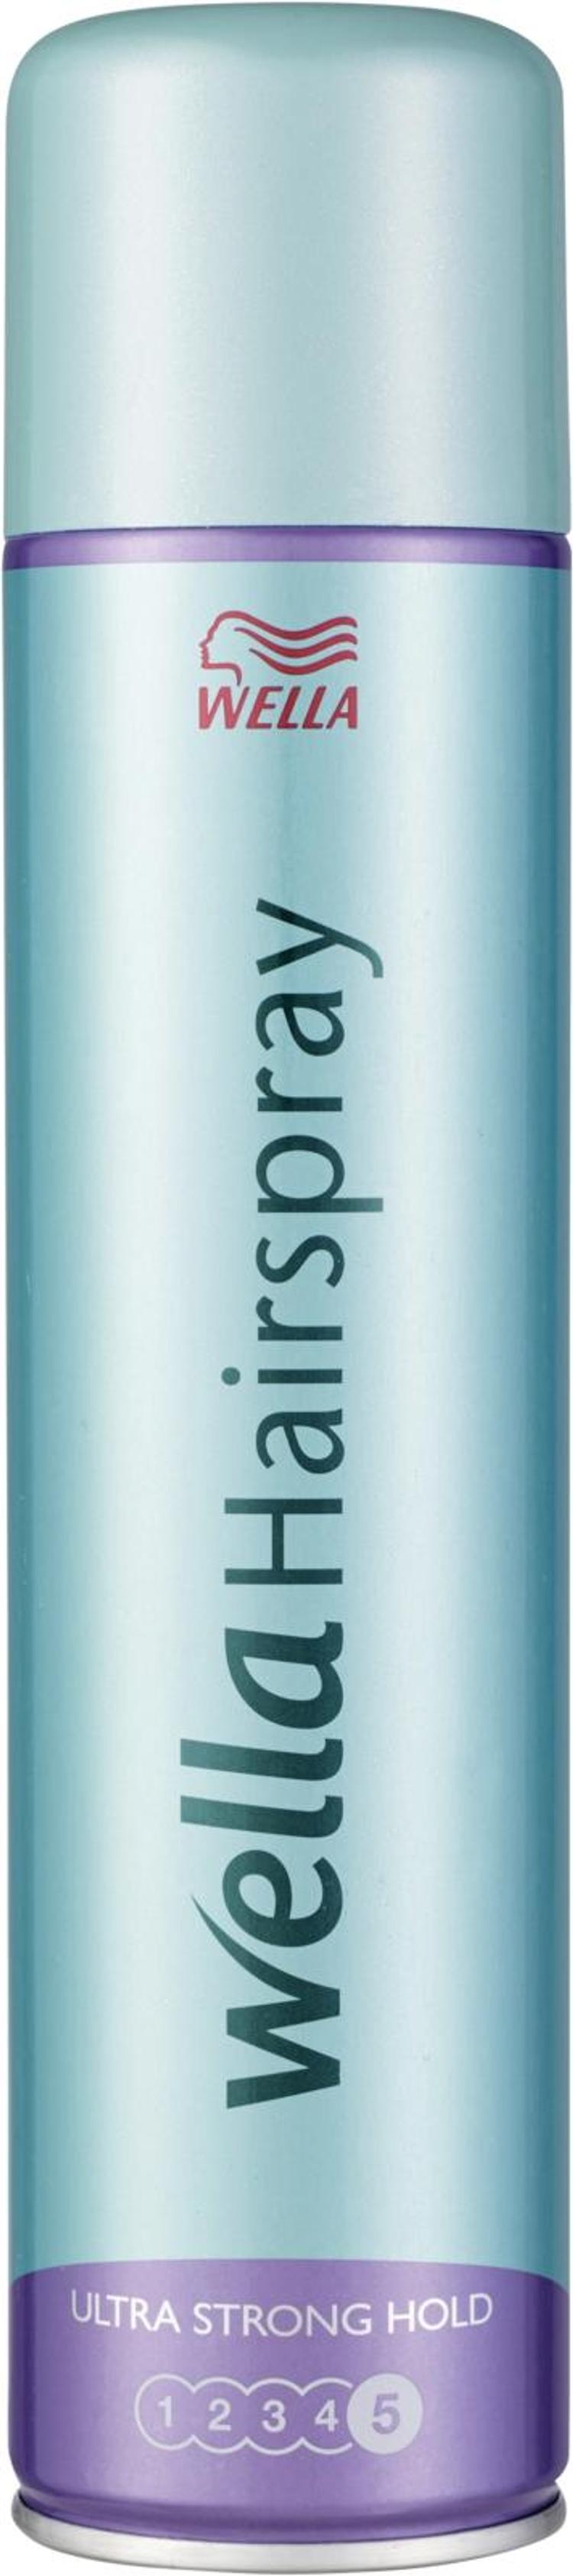 Wella Classic Hairspray ultra strong hold 5 hiuskiinne 400 ml